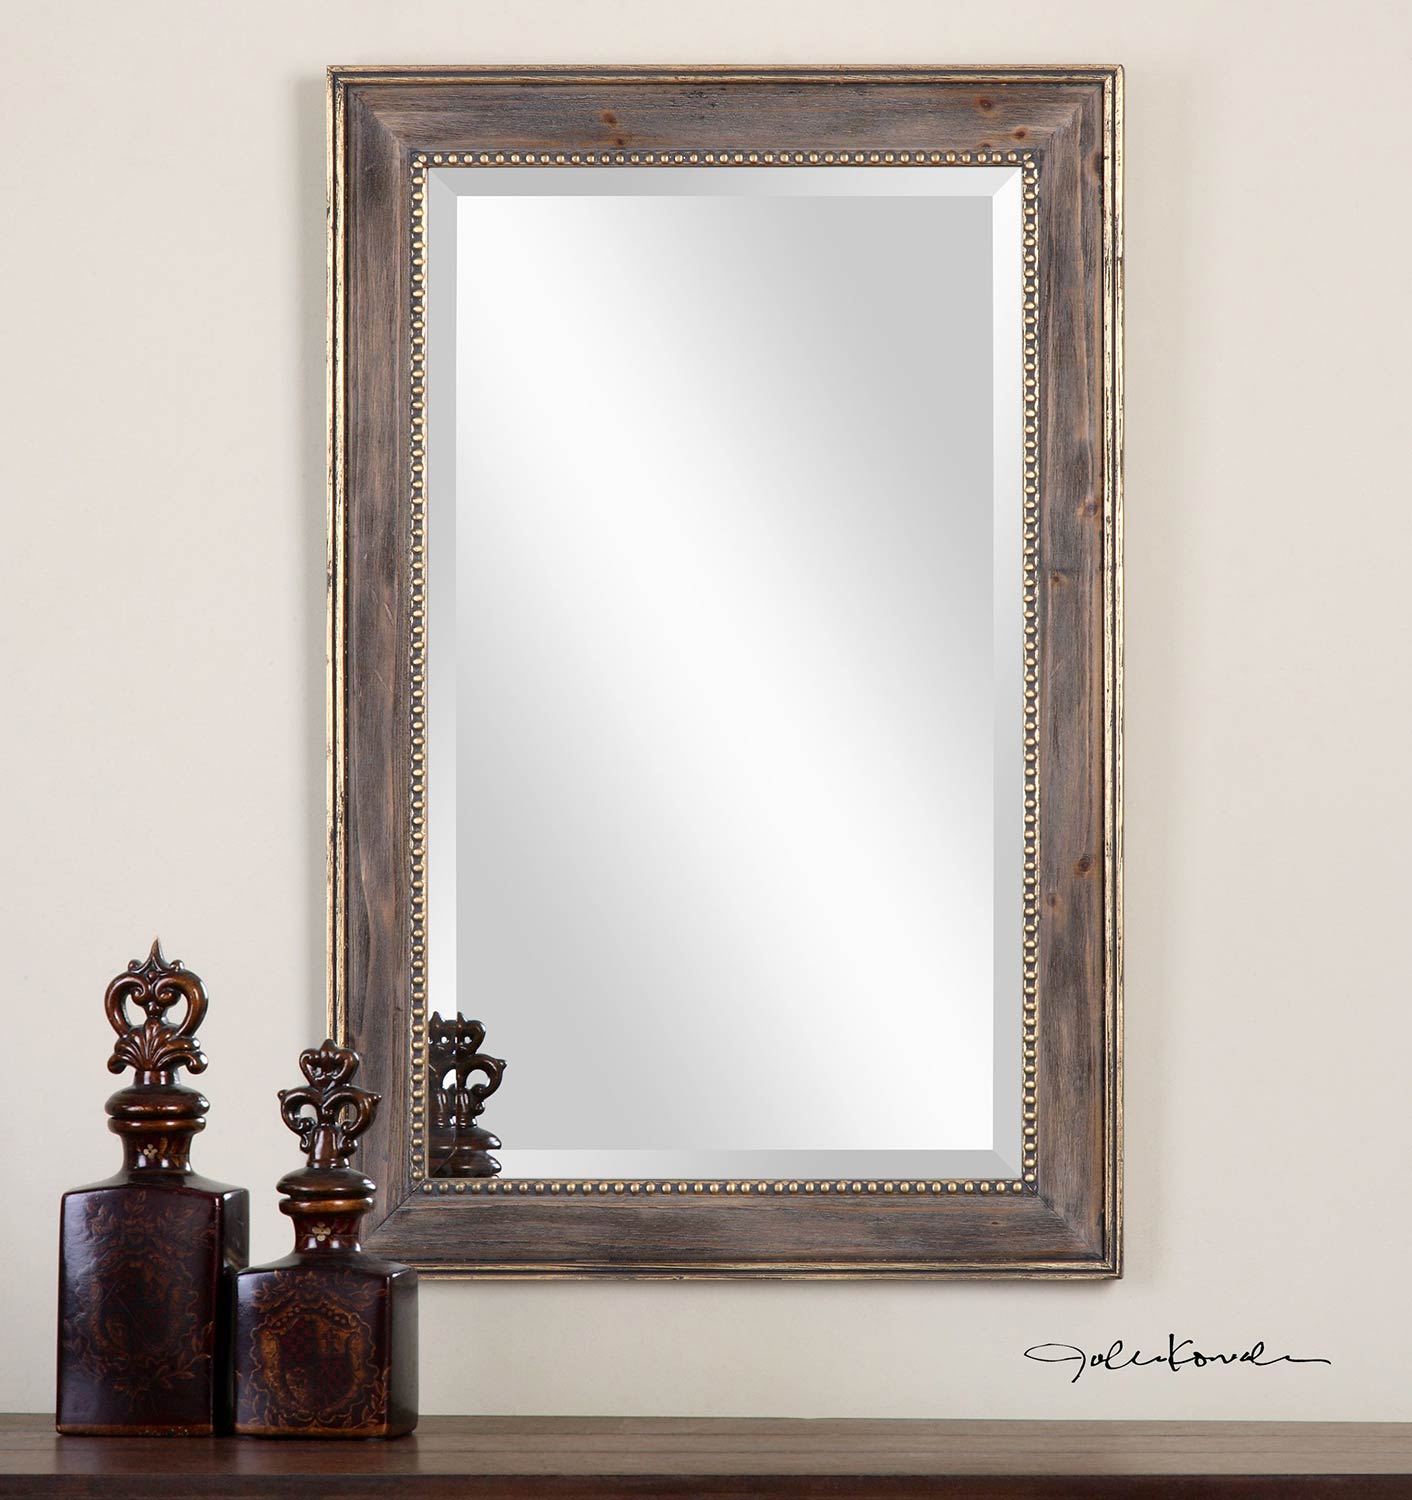 Uttermost Quintina Pine Mirror